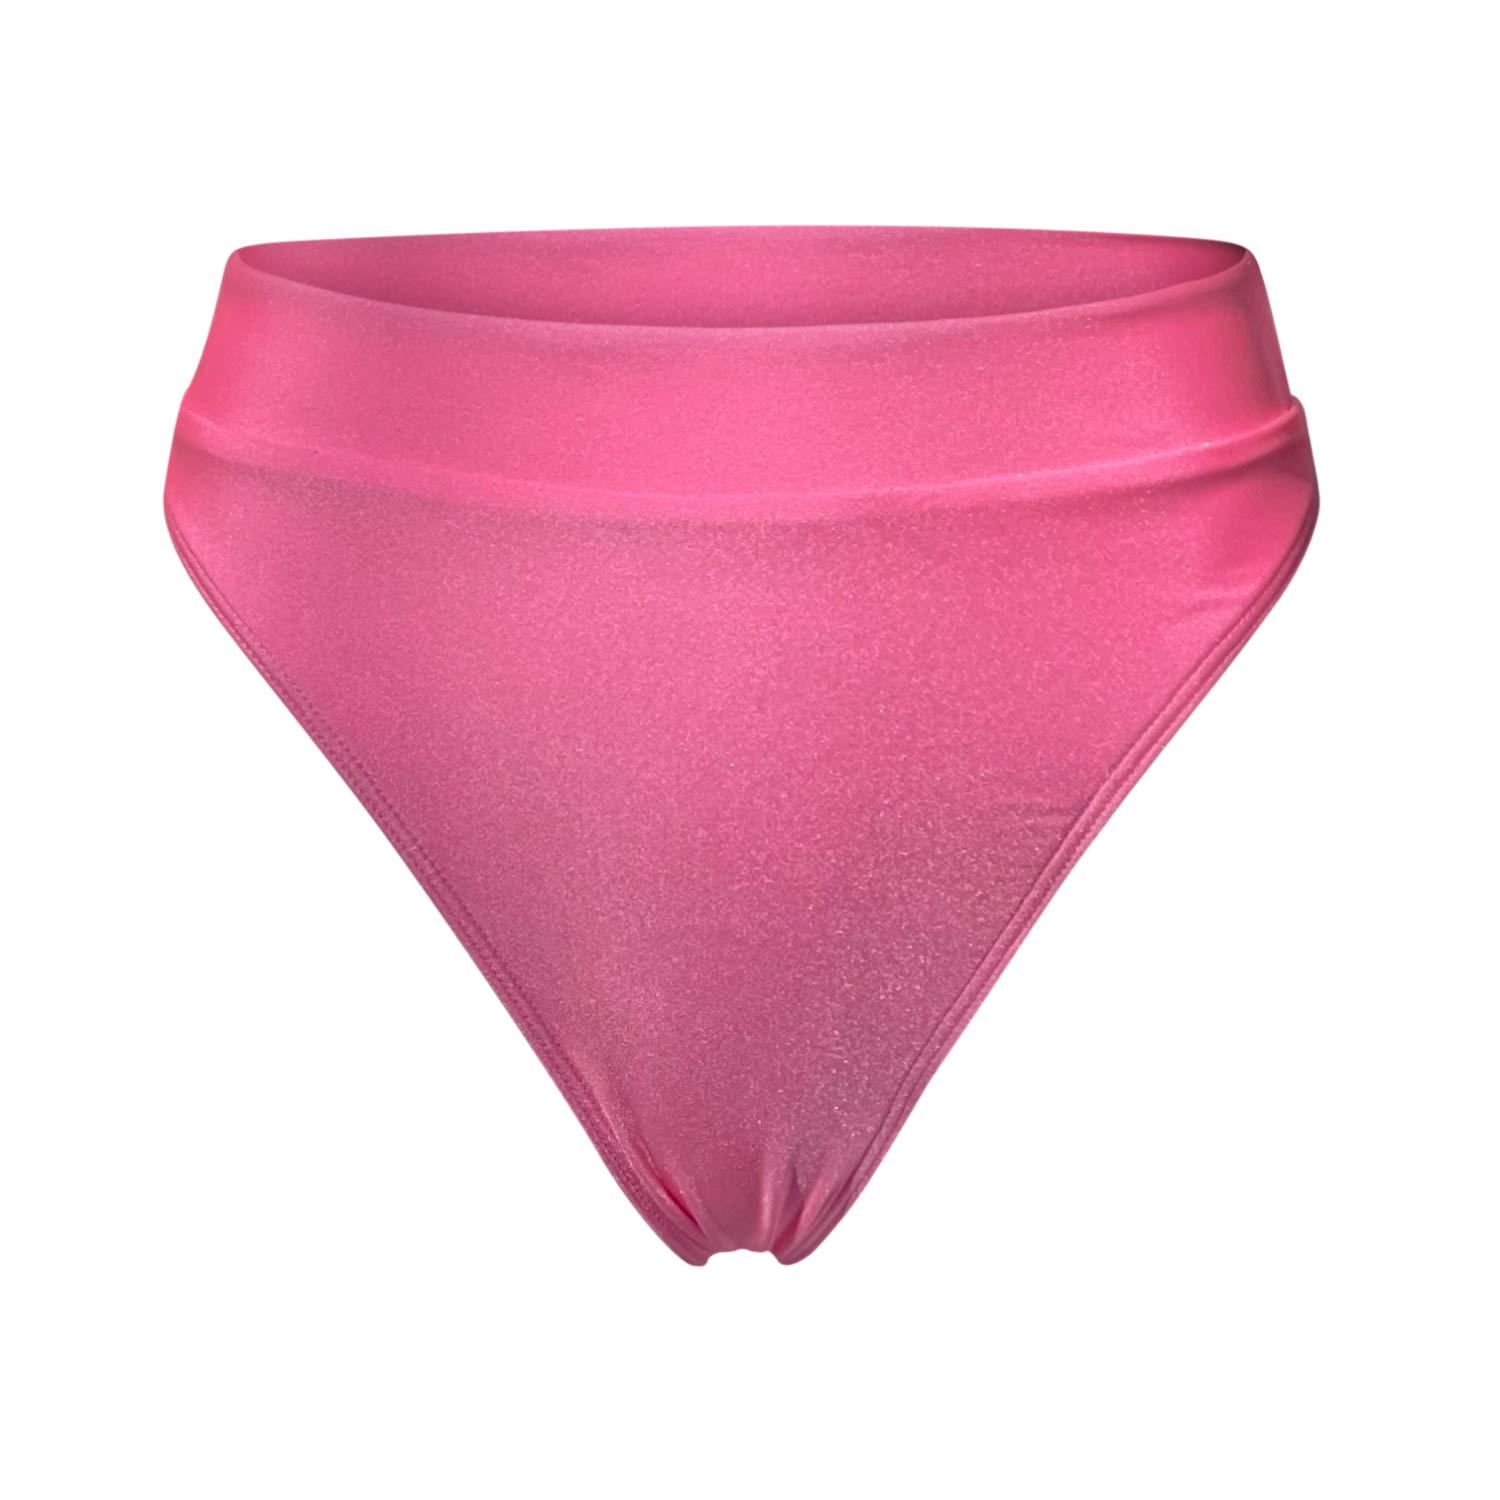 Madeleine Simon Studio Women's Pink / Purple Pink Cheeky High Waist Sporty Bikini Bottom In Pink/purple